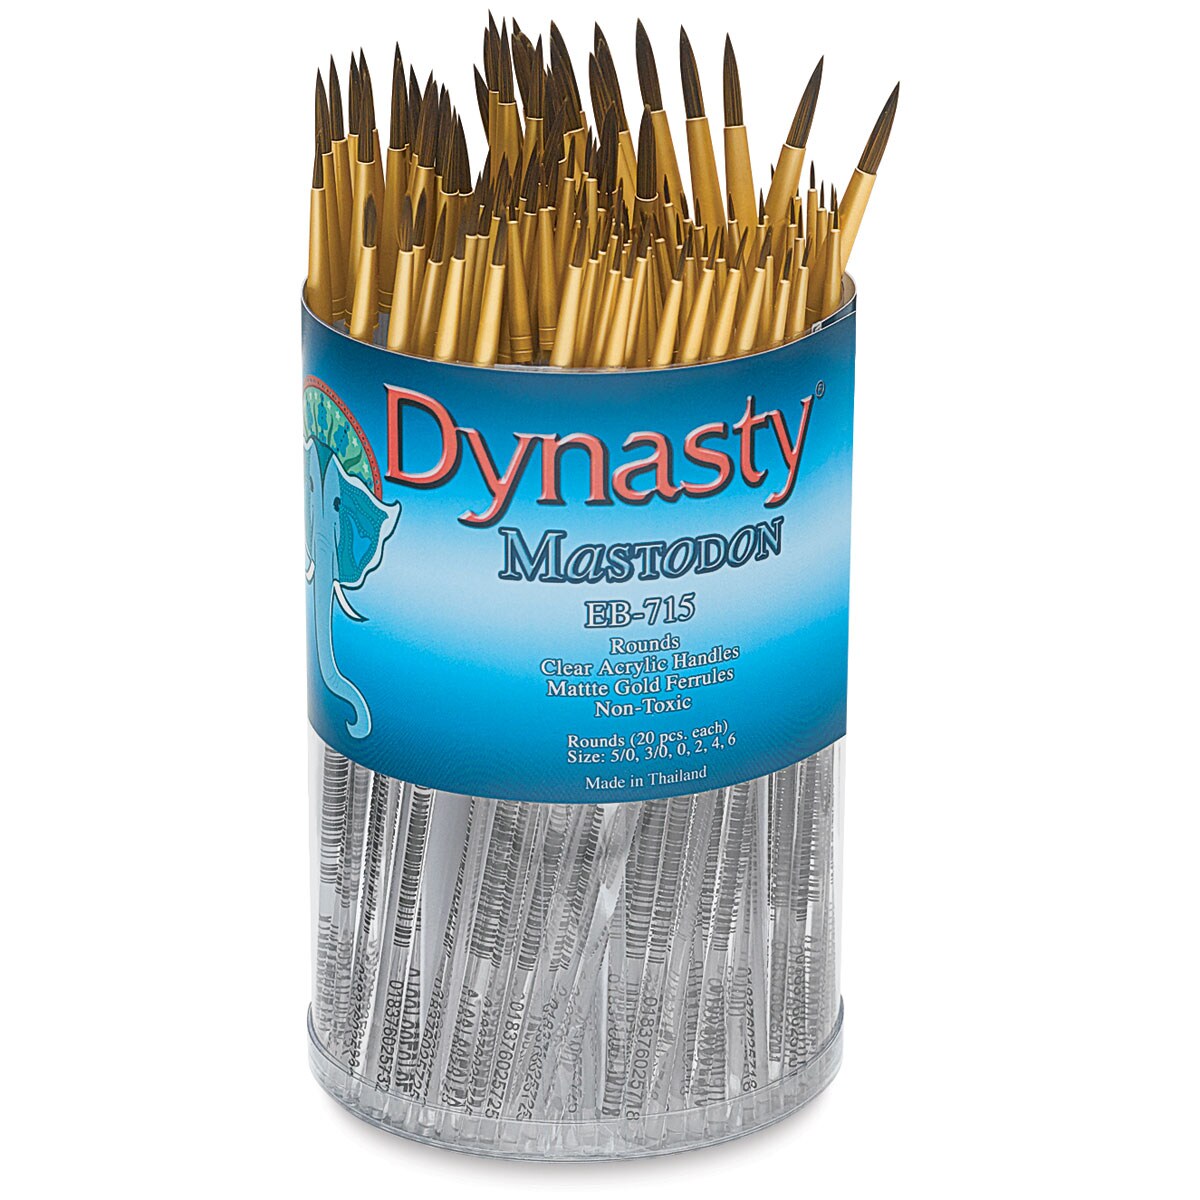 Dynasty Mastodon Synthetic Brush Canister - Round, Set of 120